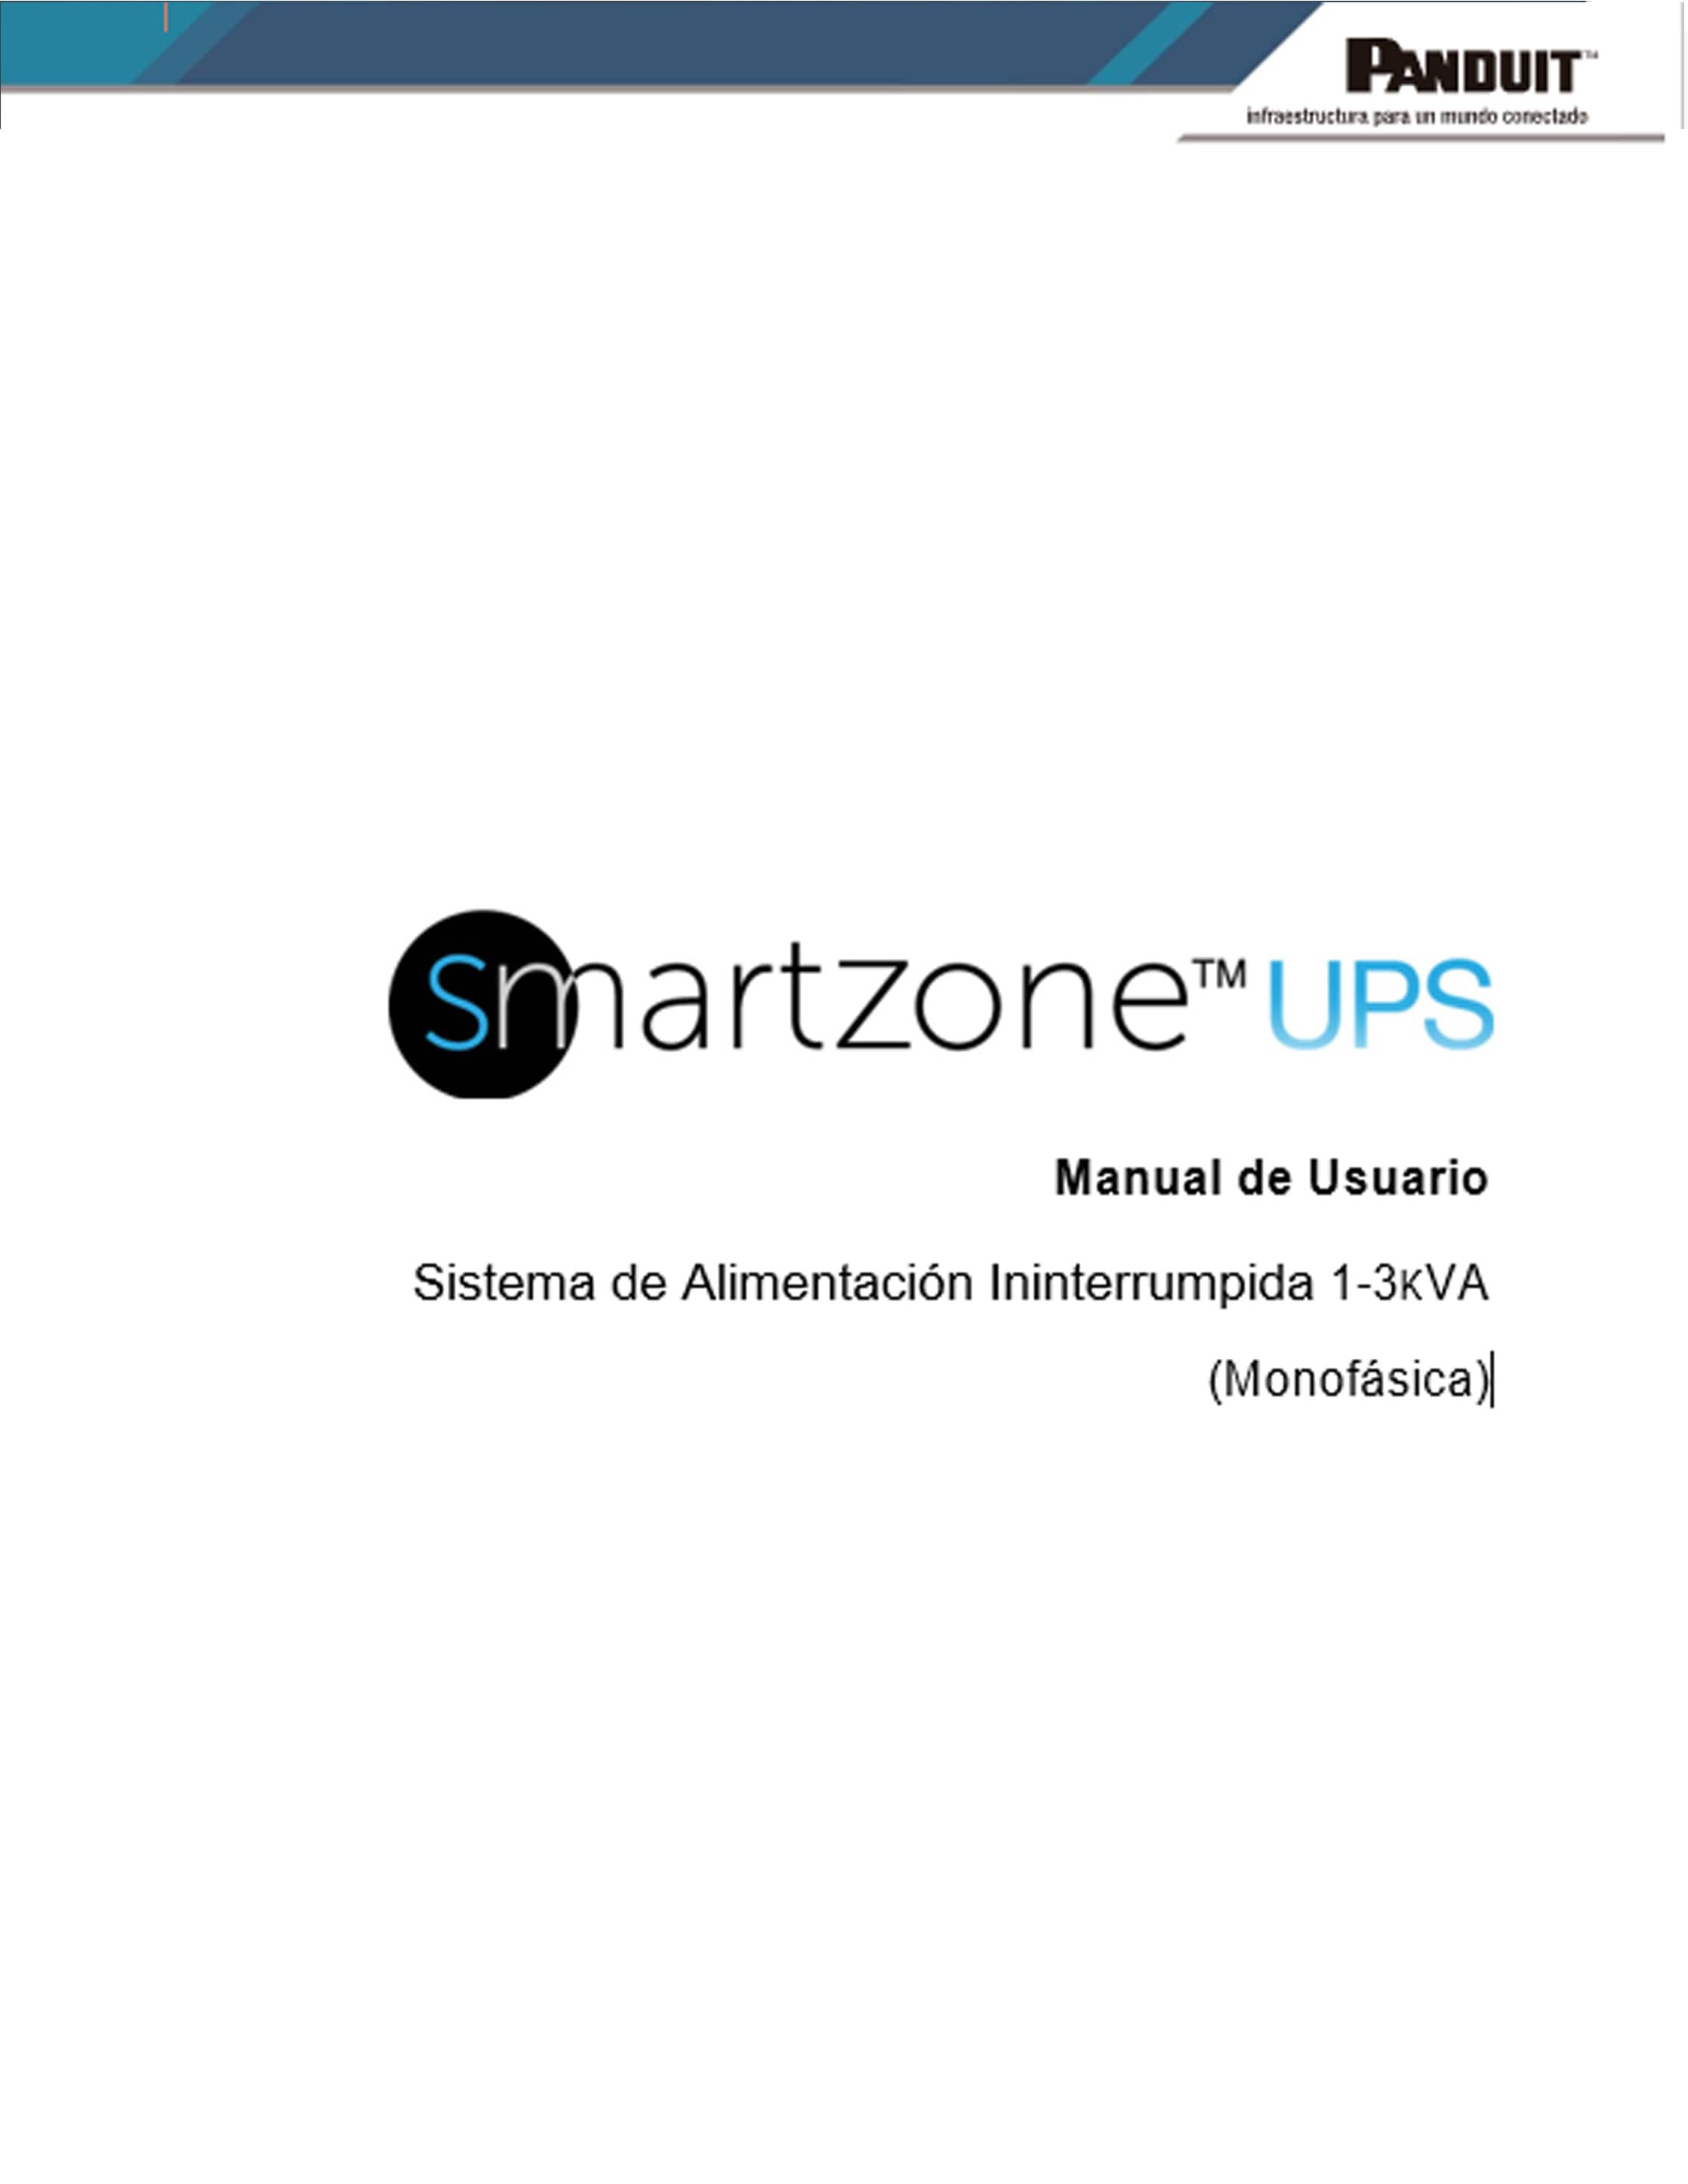 manual-SmarZone-UPS-sistema-de-alimentacion-ininterrumpida-1-3kVA-Panduit.jpg